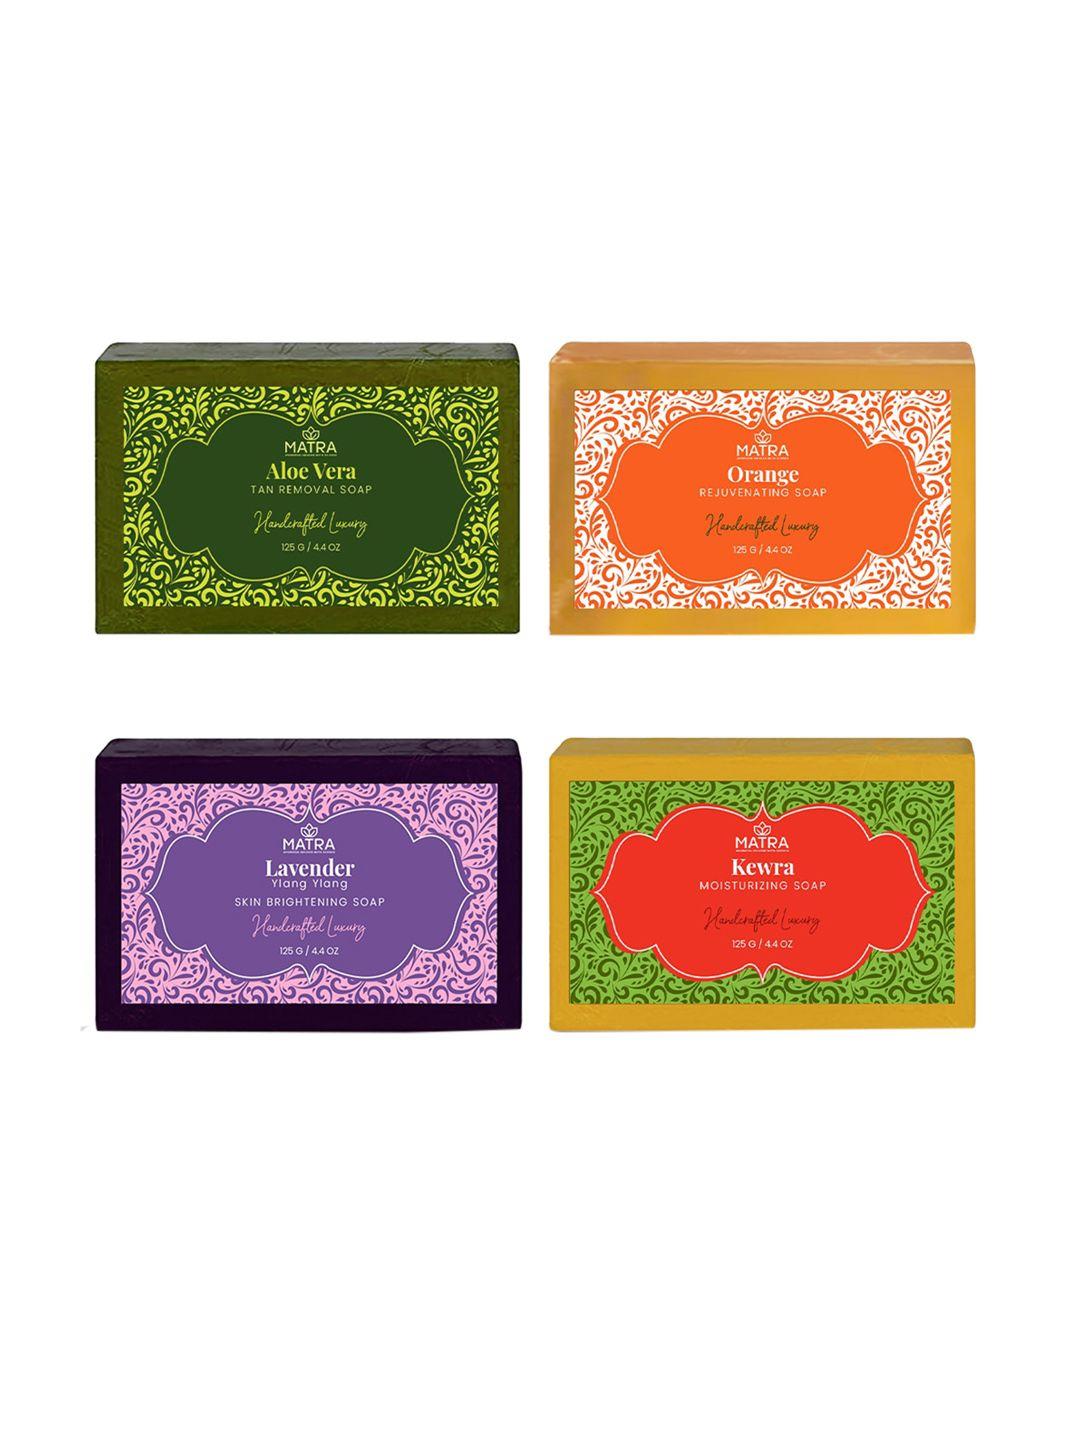 matra set of 4 bathing soaps - aloe vera + lavender + orange + kewra - 125g each